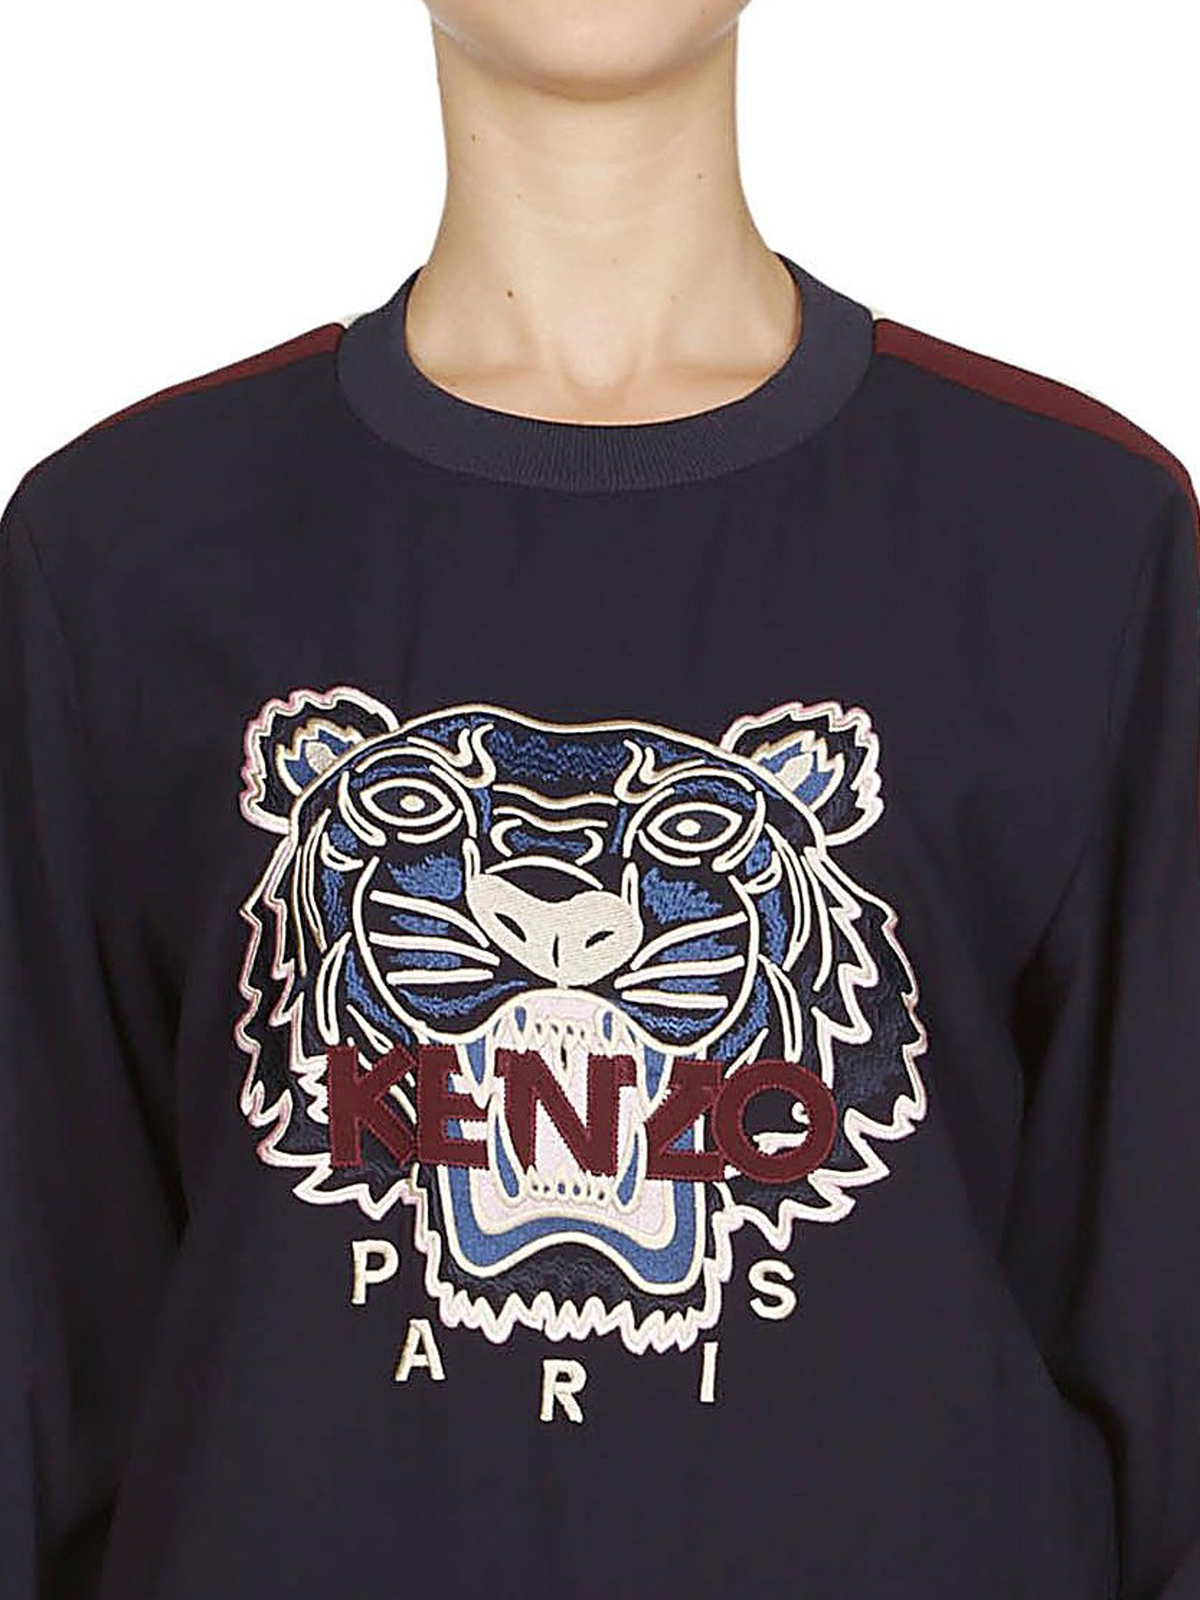 kenzo paris sweater tiger